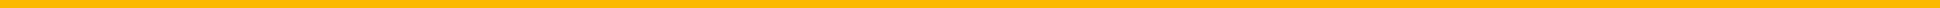 yellow bar 1900 8